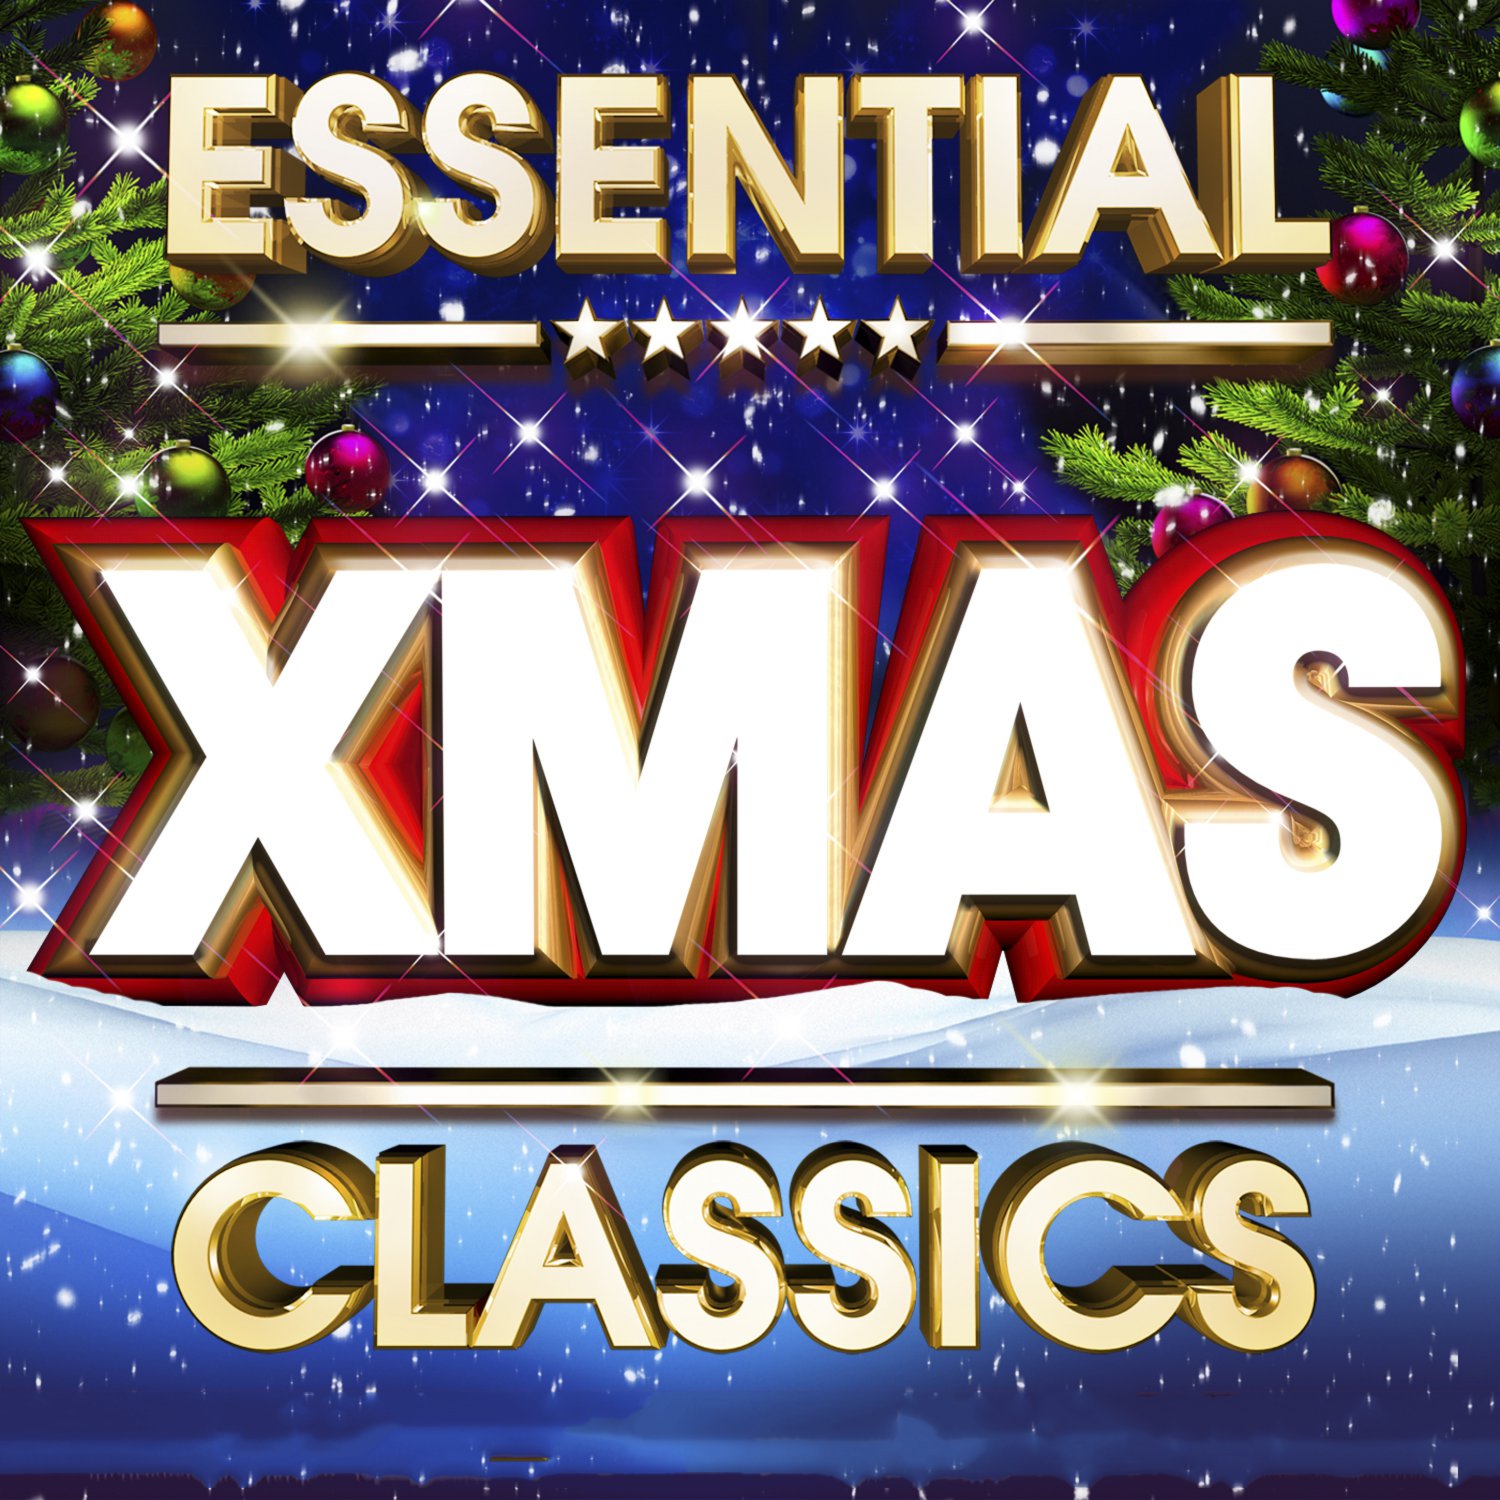 Christmas Classics Music Videos Collection (1 DVD) 22 Music Videos